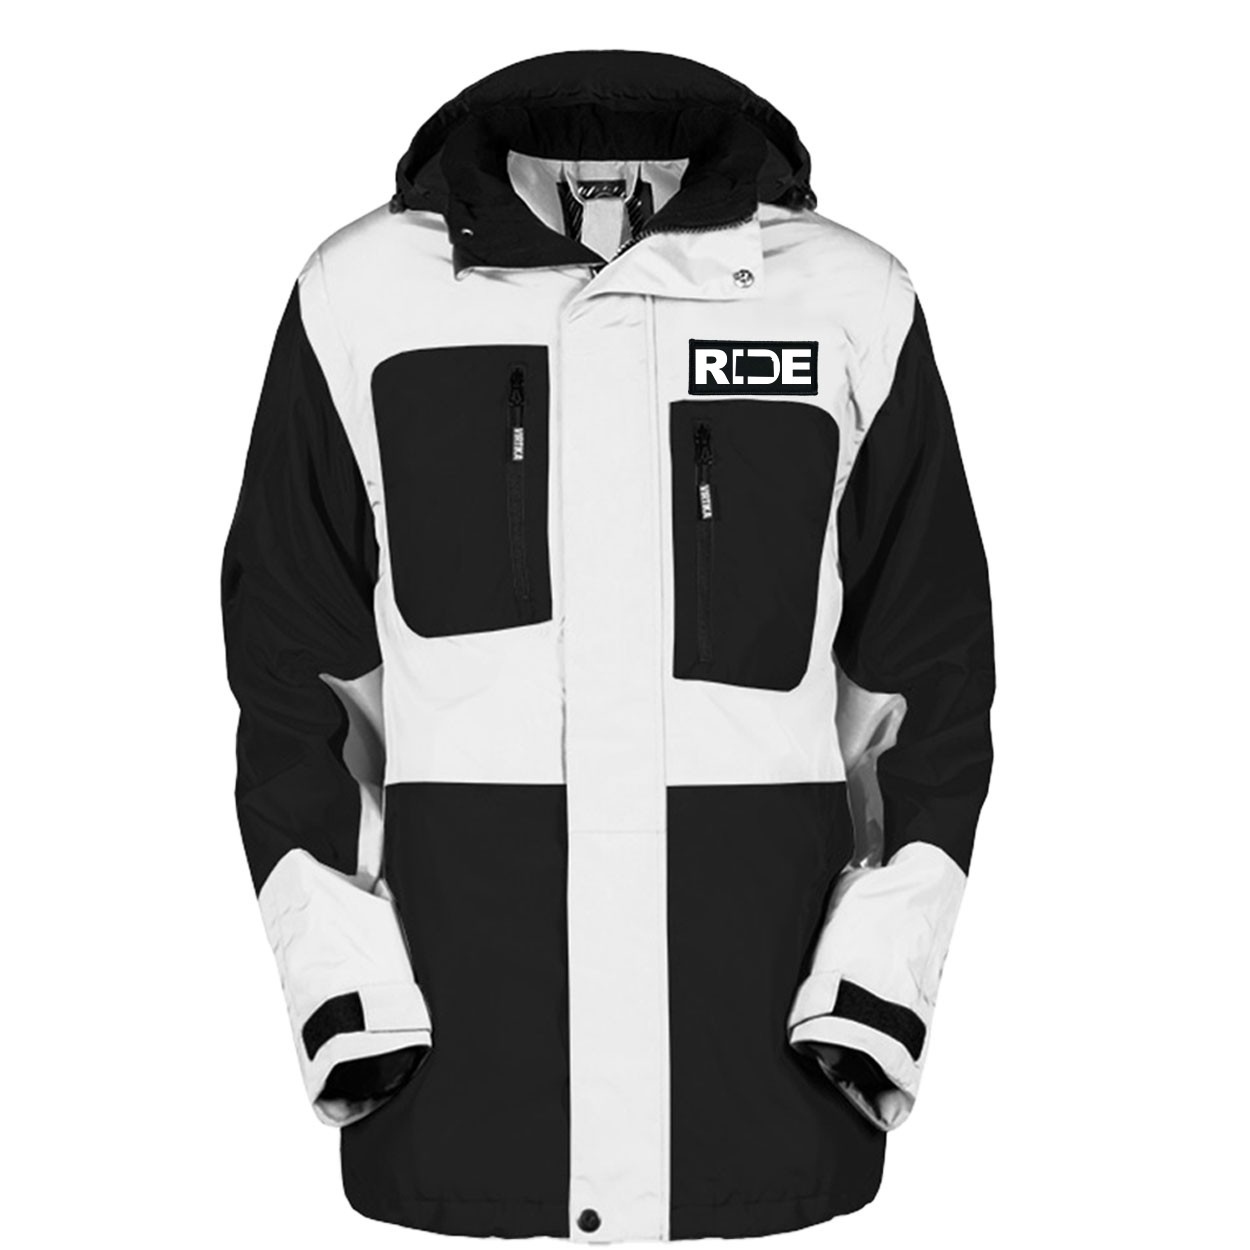 Ride Kansas Pro Waterproof Breathable Winter Virtika Jacket Black/White (White Logo)